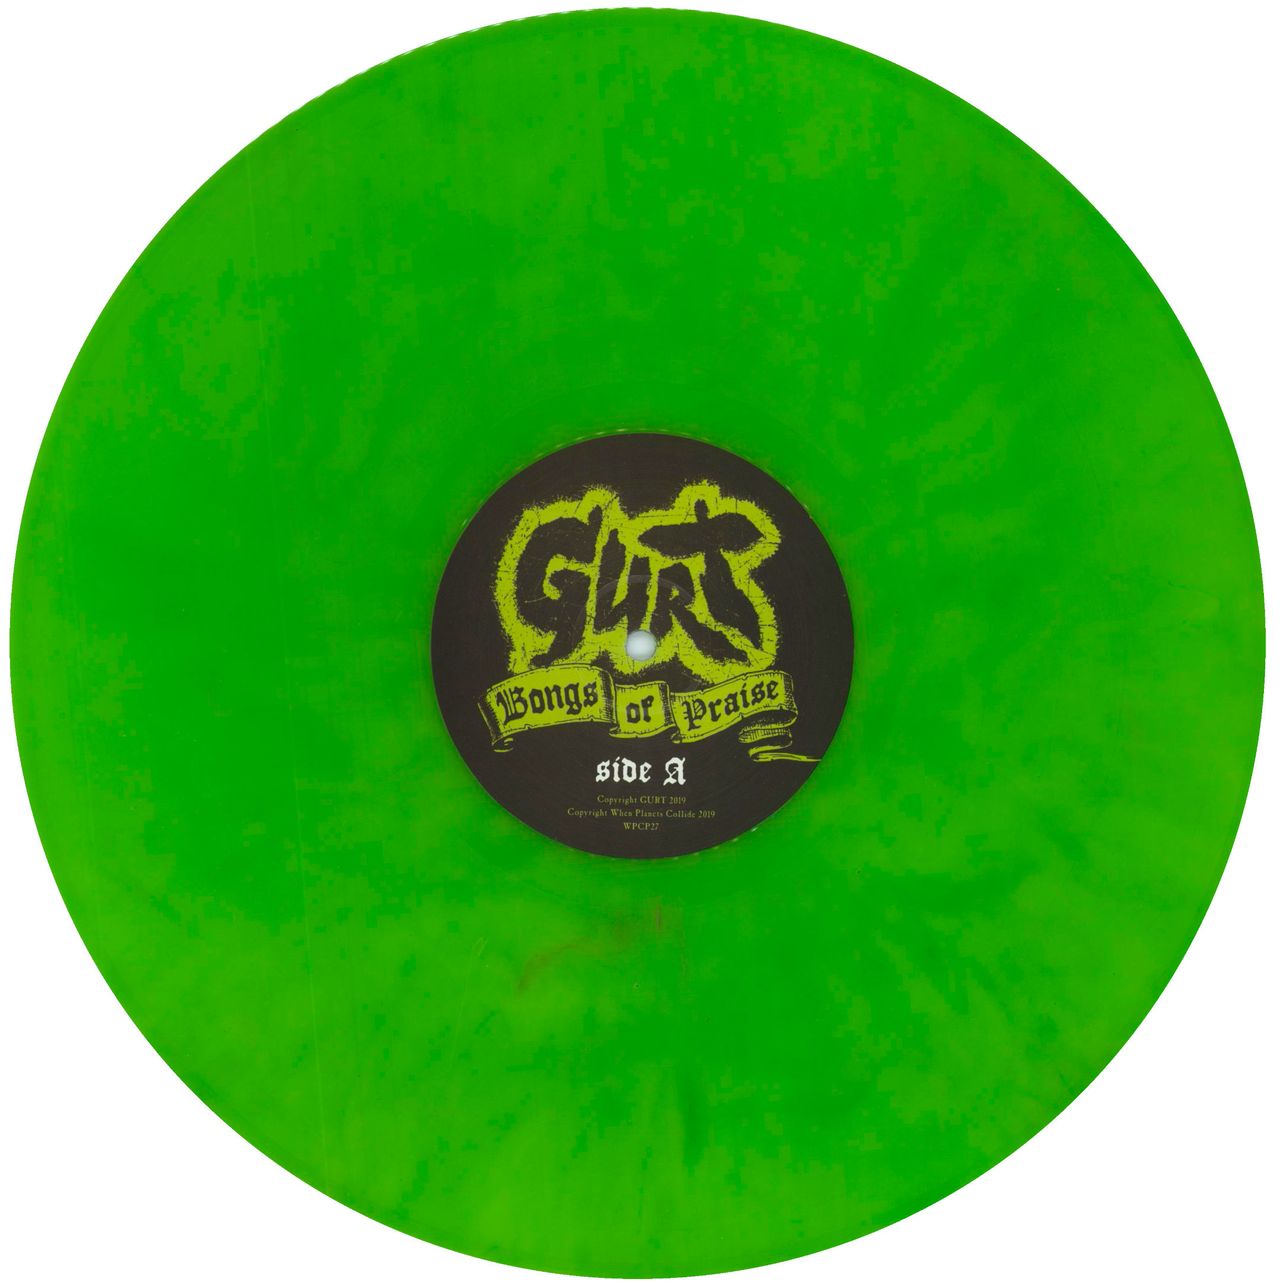 Gurt Bongs Of - Green Vinyl LP RareVinyl.com